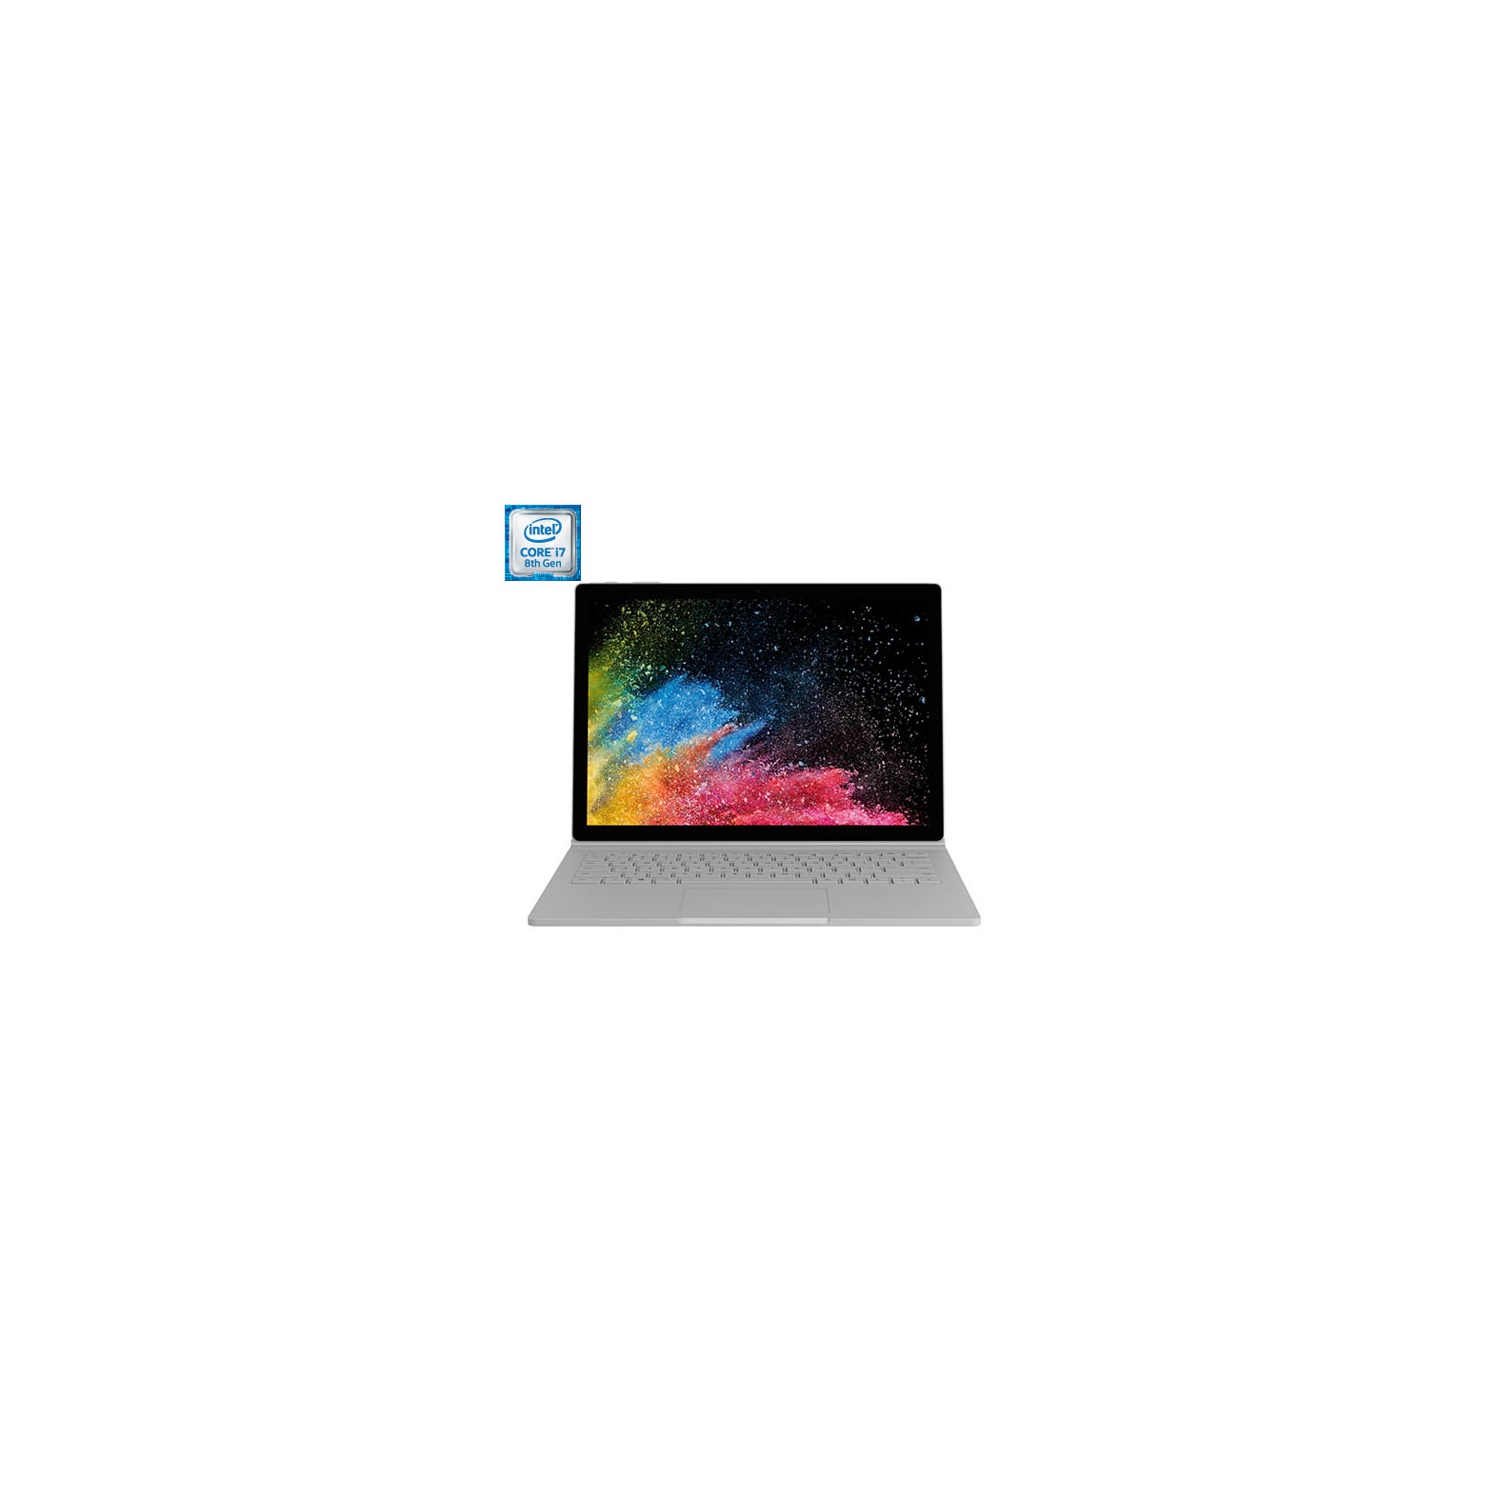 Refurbished (Good) - Microsoft Surface Book 2 13.5" 2-in-1 Laptop (Intel Core i7-8650U/ 256GB SSD/ 8GB RAM) - English